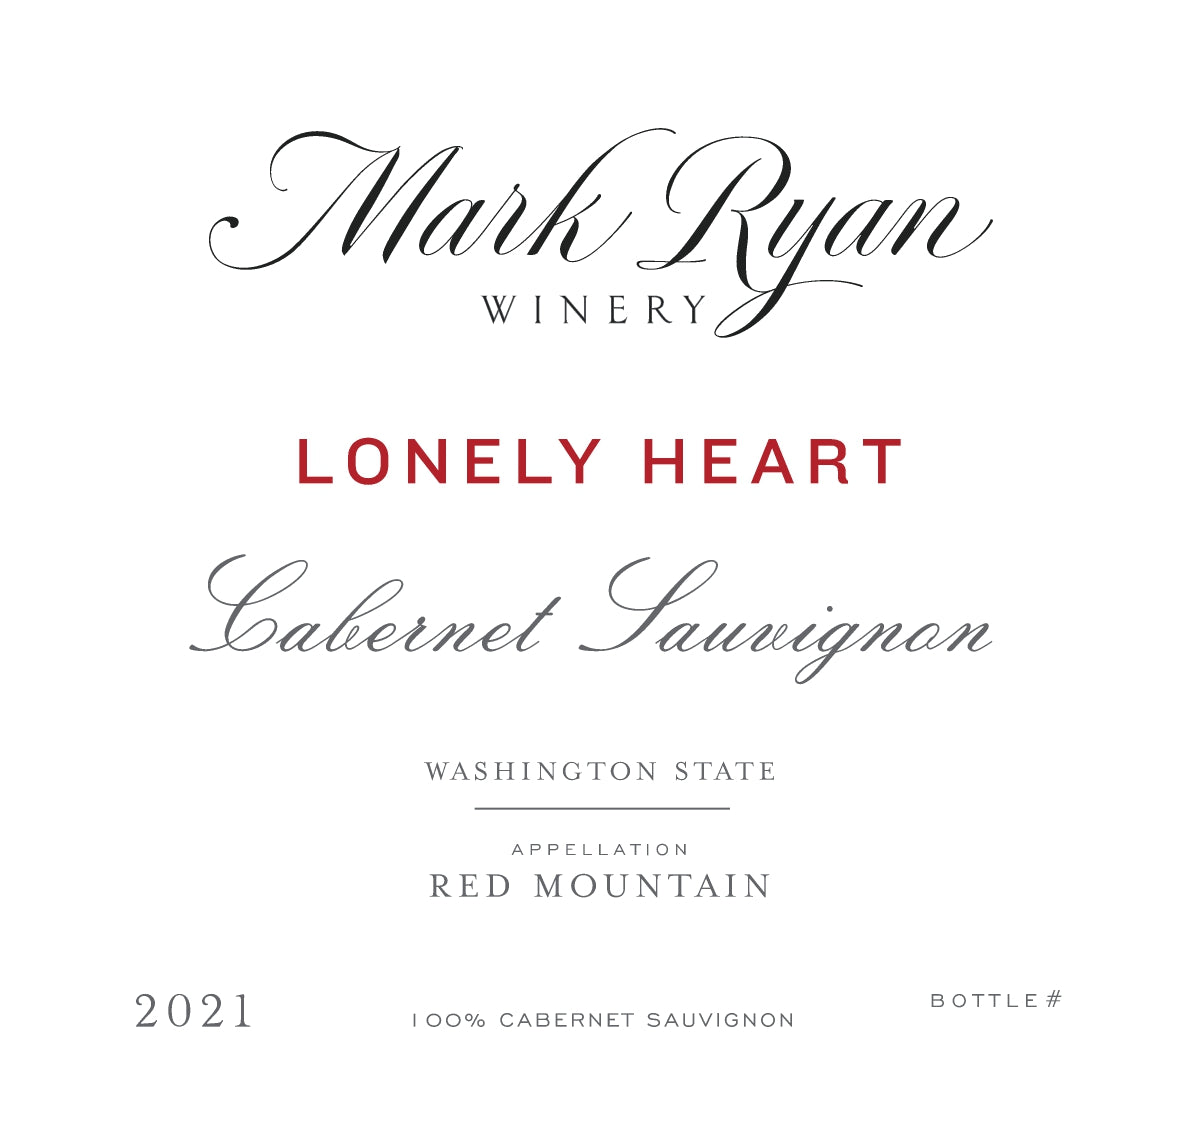 Mark Ryan Lonely Heart Cabernet Sauvignon 2021